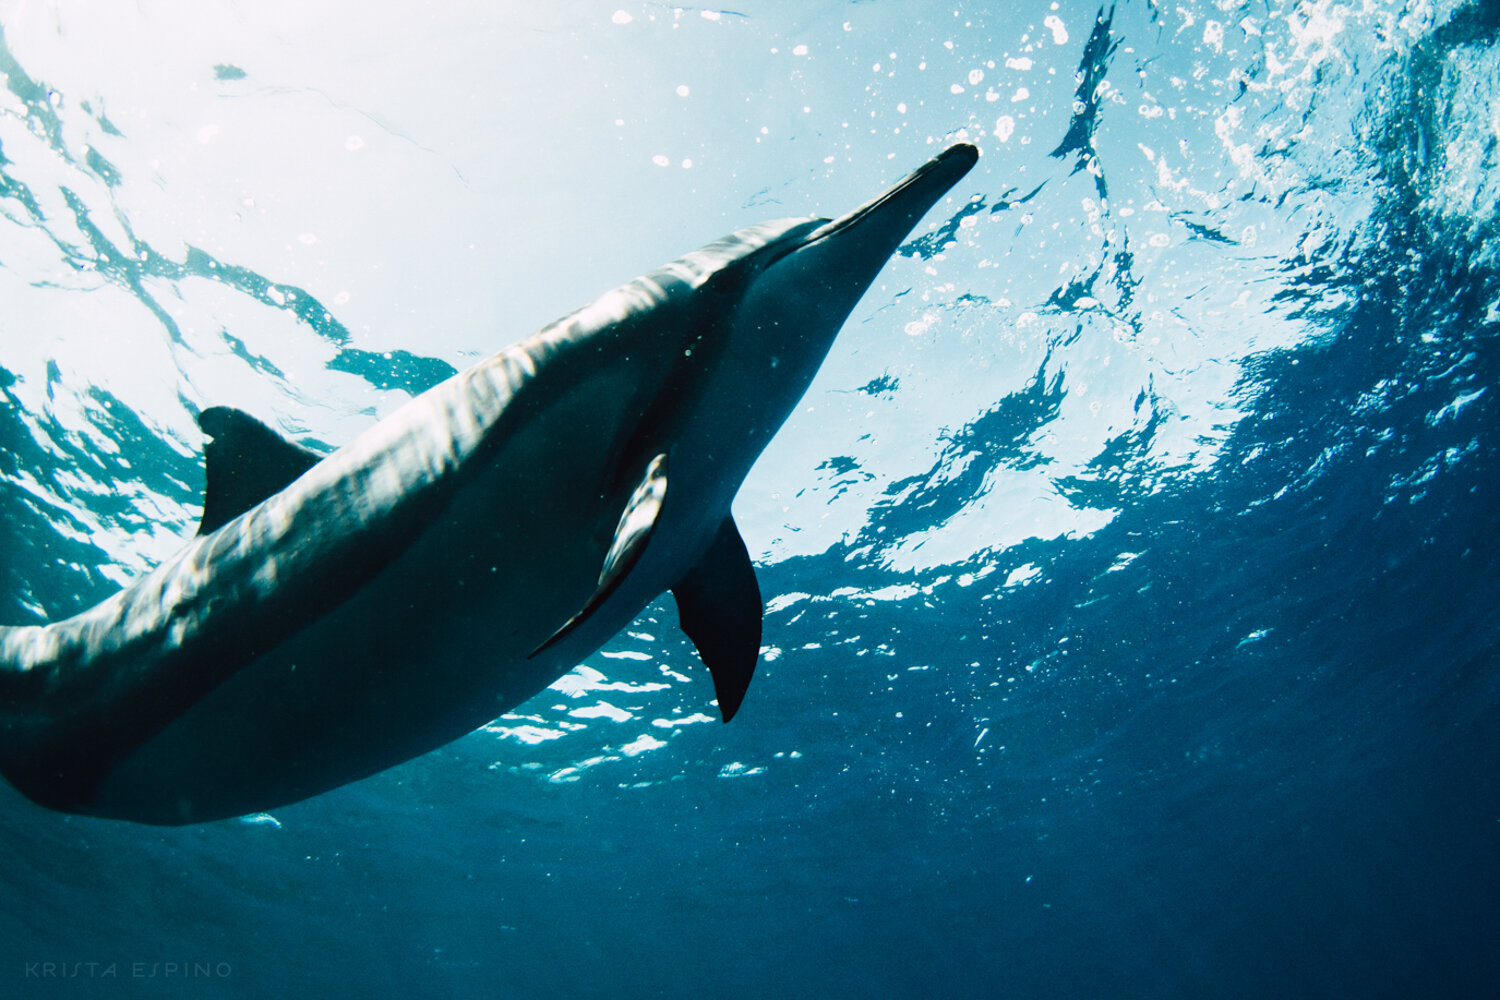 dolphin eco tour wild wildlife sealife lifestyle nature photography photographer krista espino travel underwater swim ocean big island hawaii kona dolphins_-19.jpg